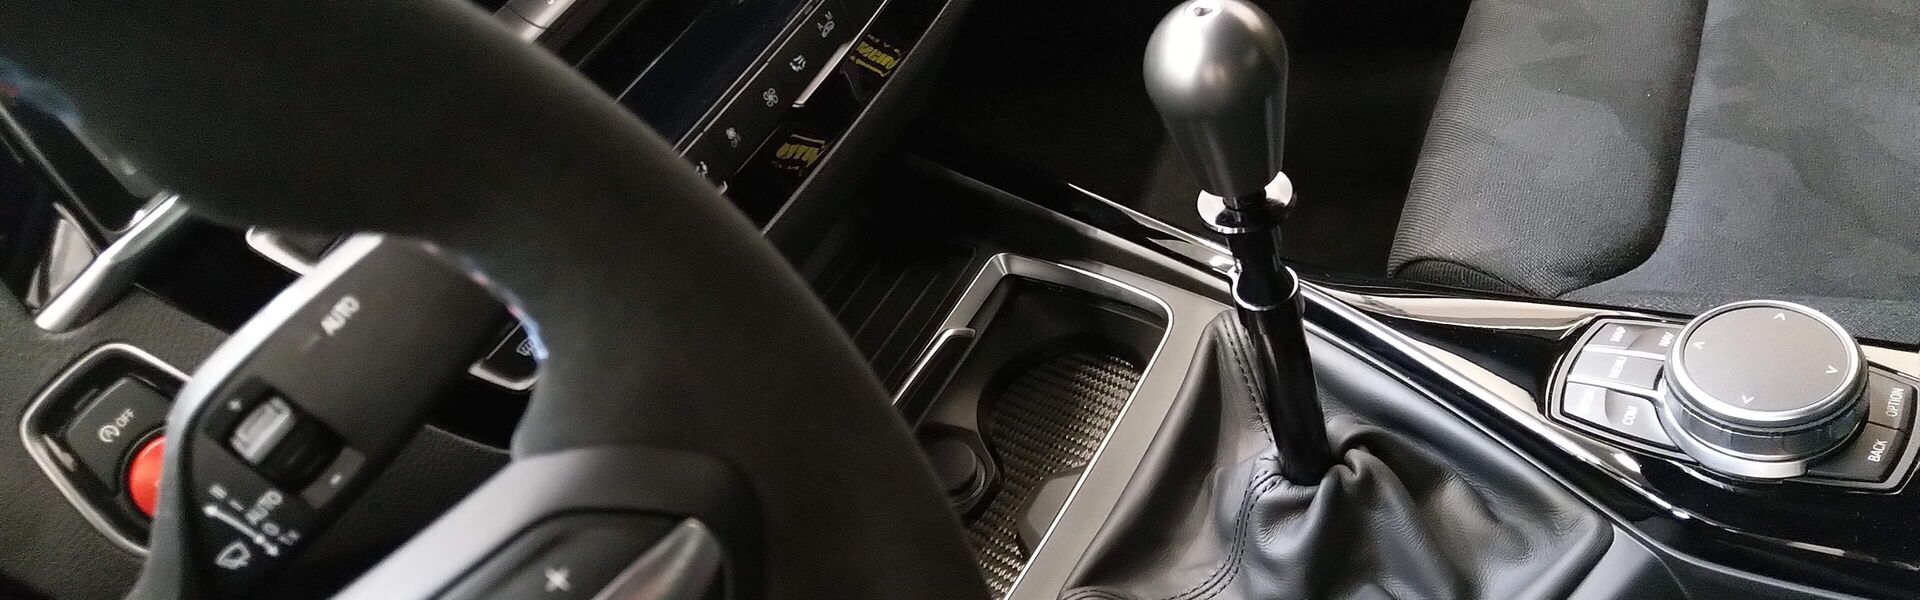 Převodovka/Řazení  pro automobil Lamborghini Huracán LP 580